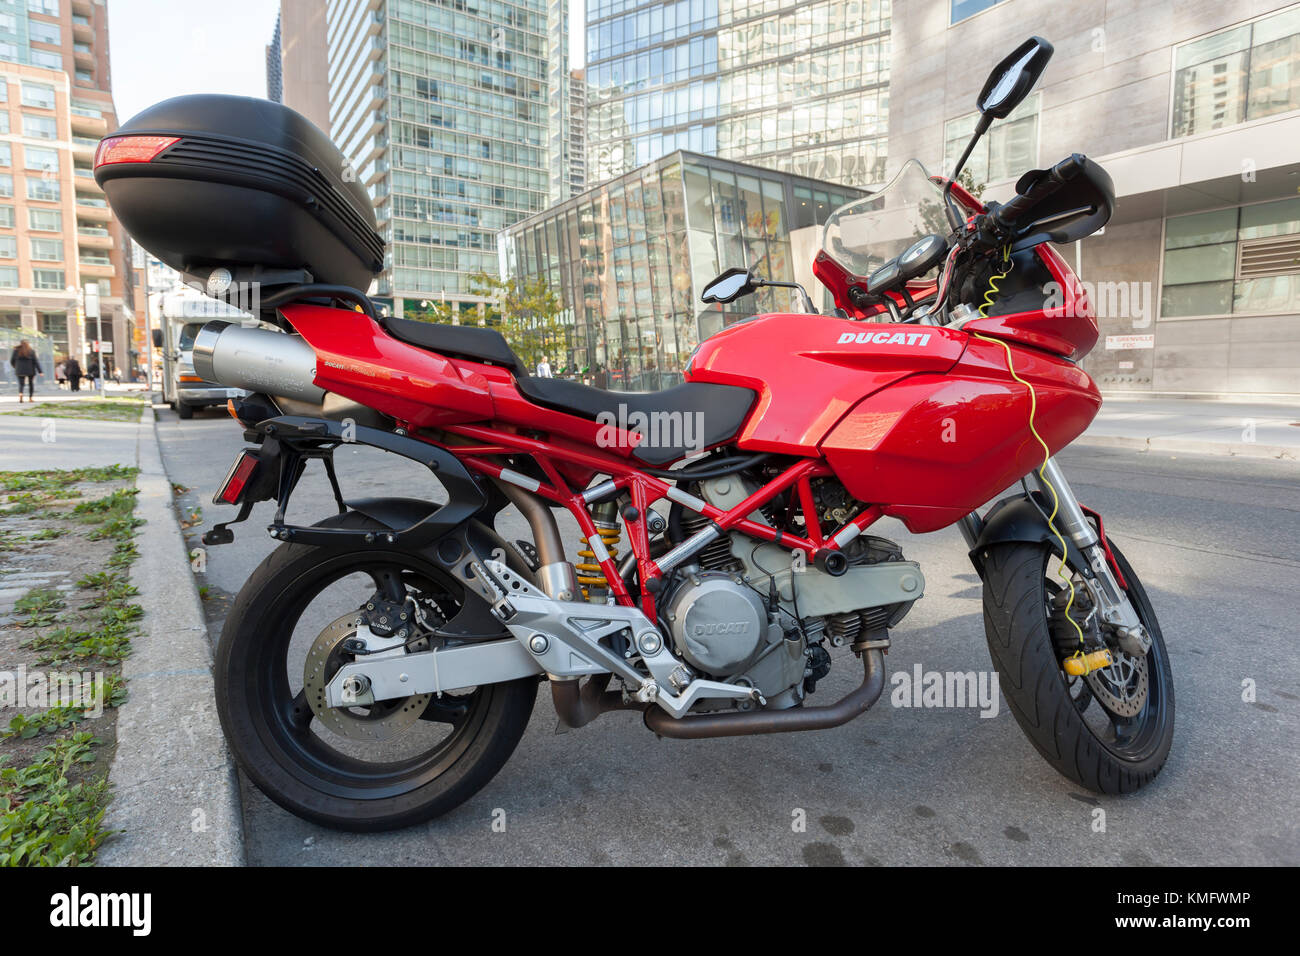 Toronto, Canada - oct 19, 2017 : moto ducati multistrada garé dans une rue du centre-ville de Toronto, Canada Banque D'Images